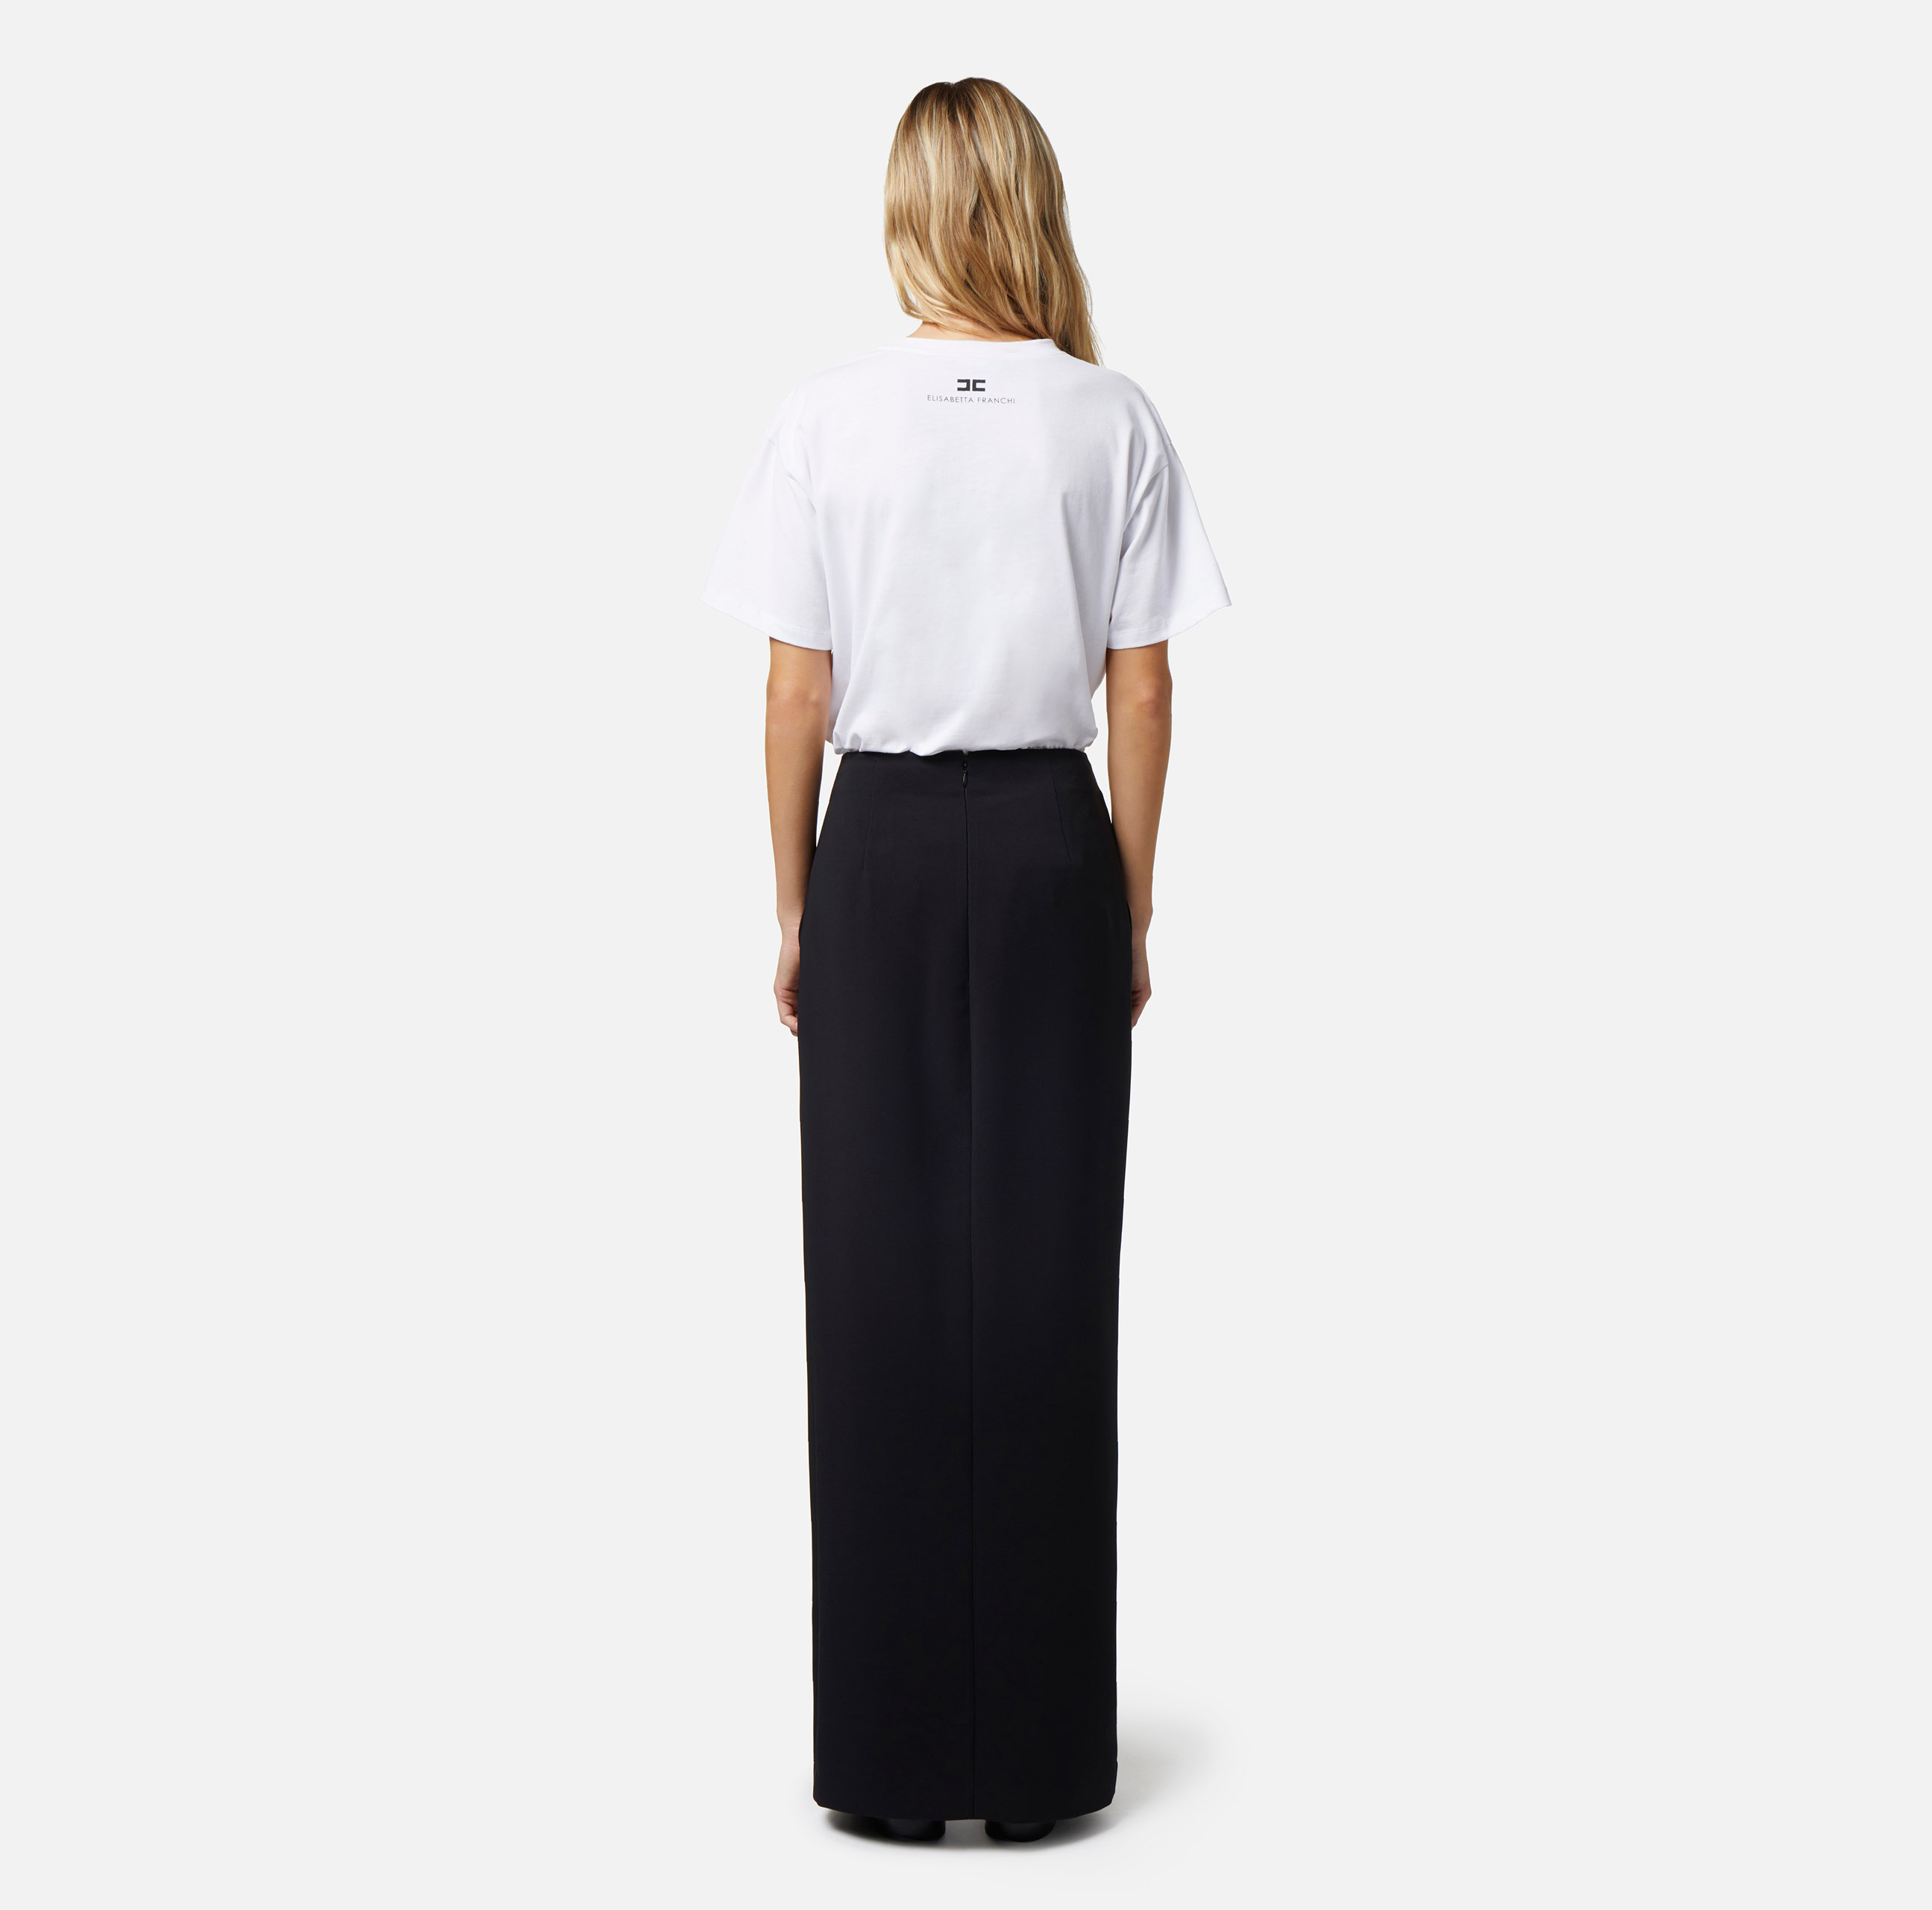 Long skirt in flowing crêpe fabric - Elisabetta Franchi